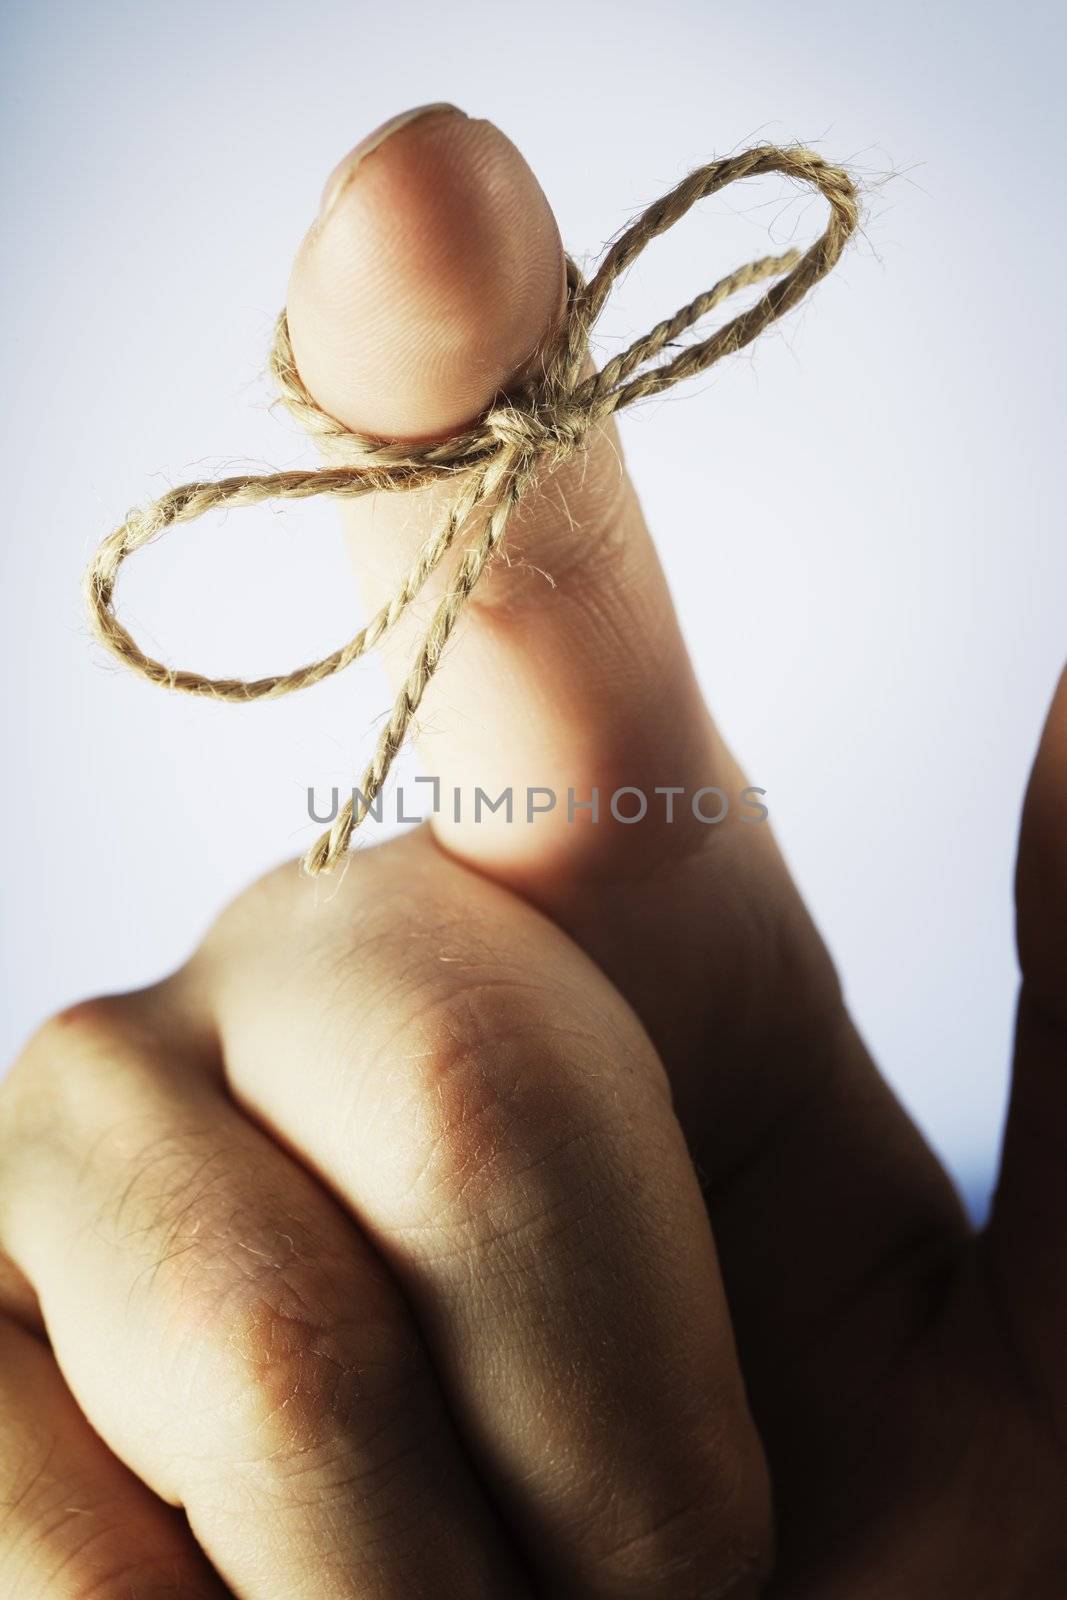 A piece of string tied around index finger